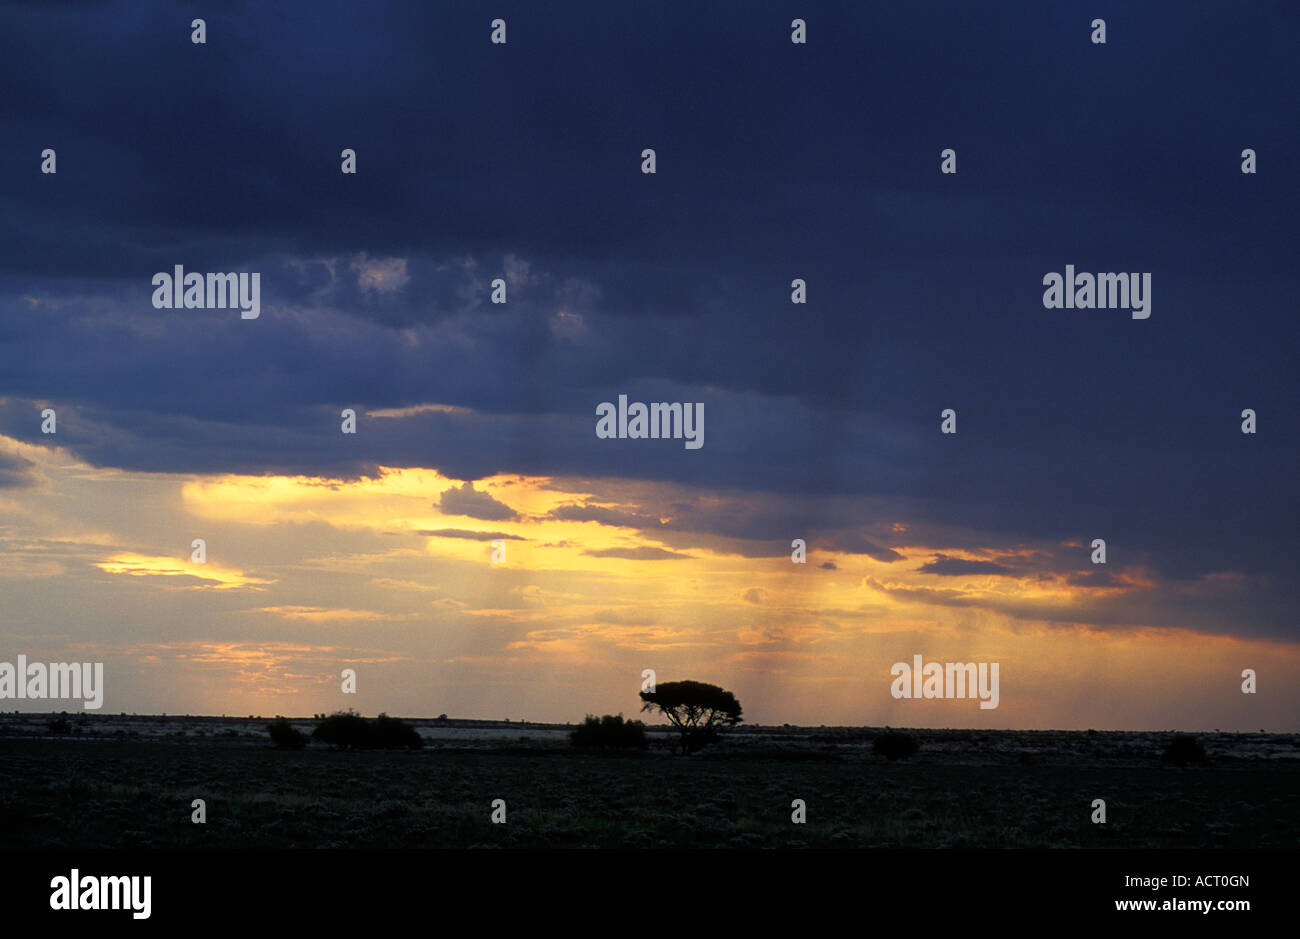 Sunset silhouette of Kalahari horizon with rainstorm in distance Deception Valley Central Kalahari Game Reserve Botswana Stock Photo